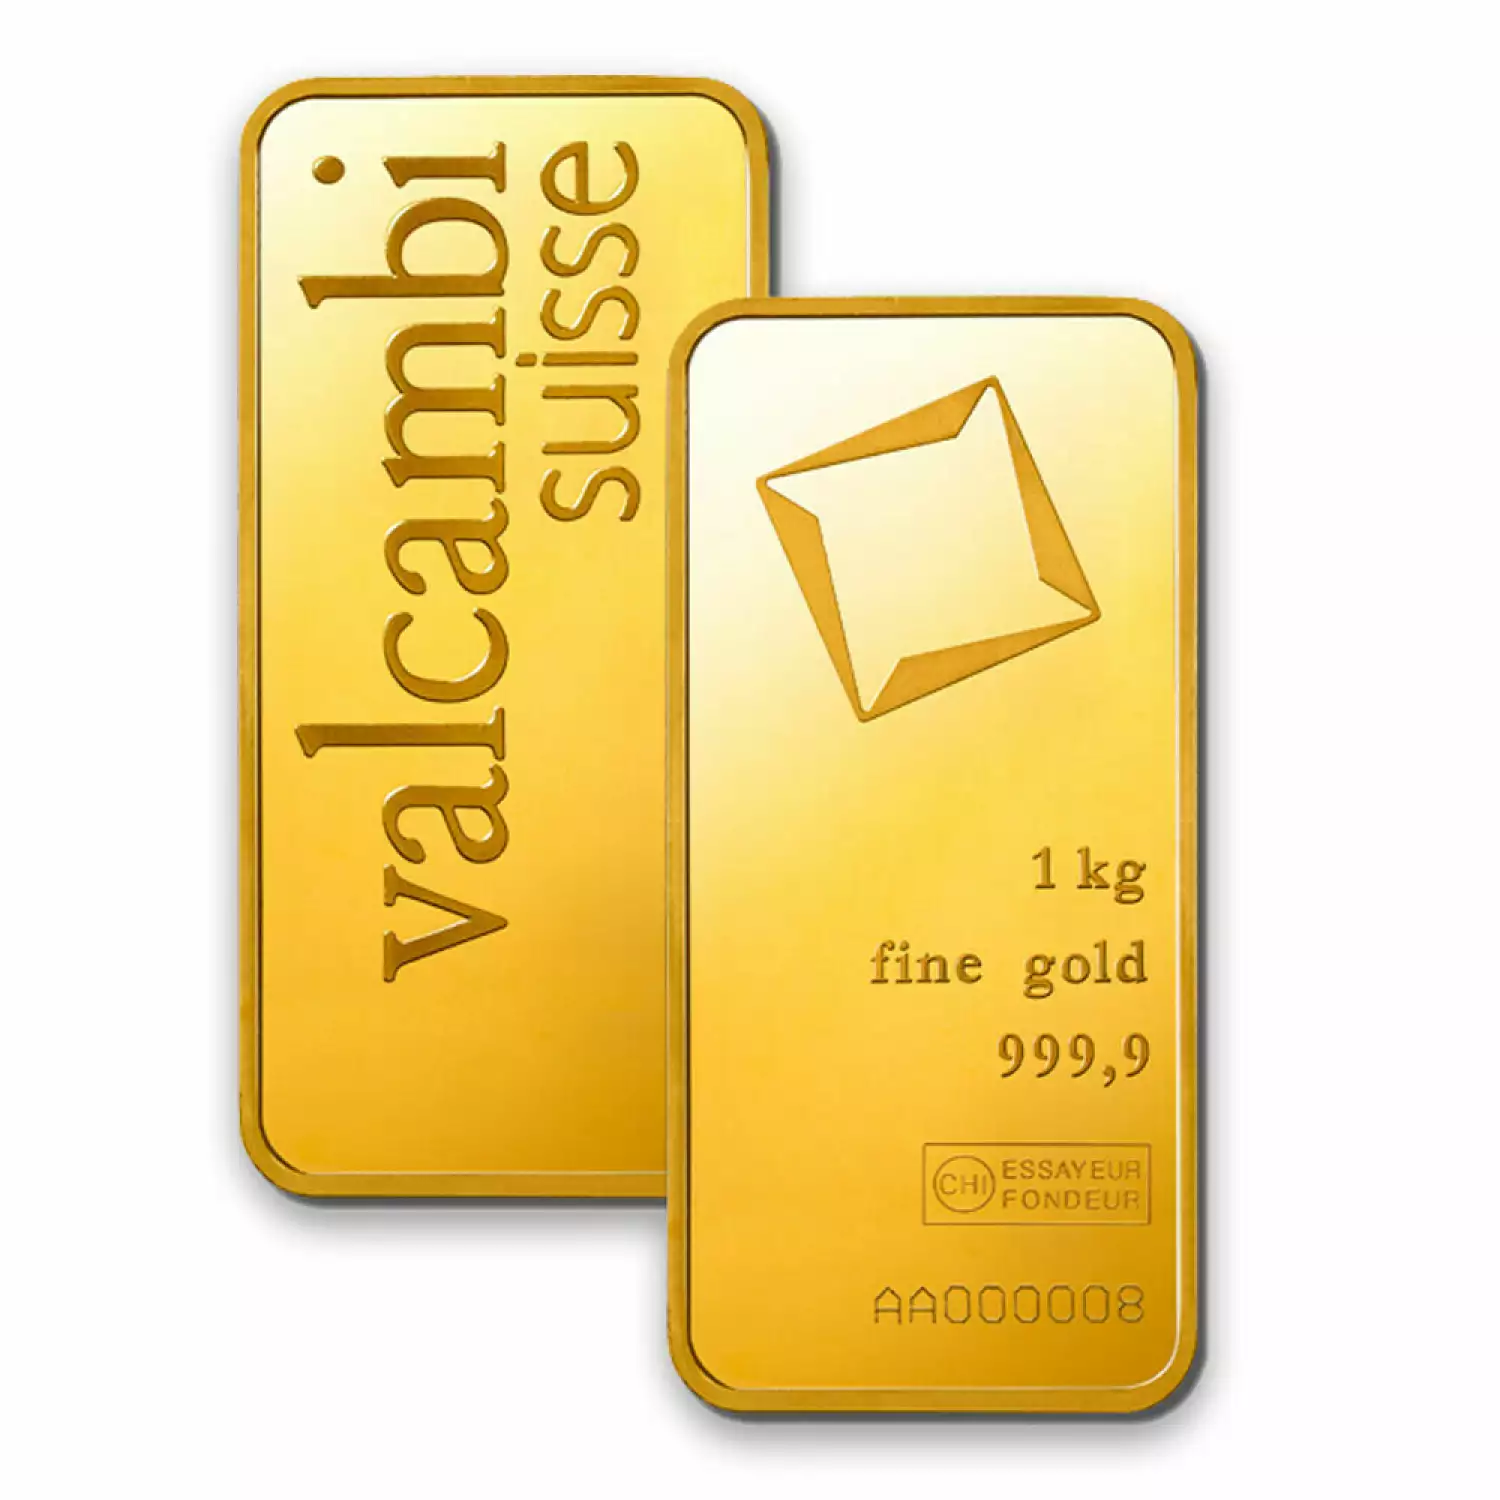 1kg Valcambi Minted Gold Bar (2)